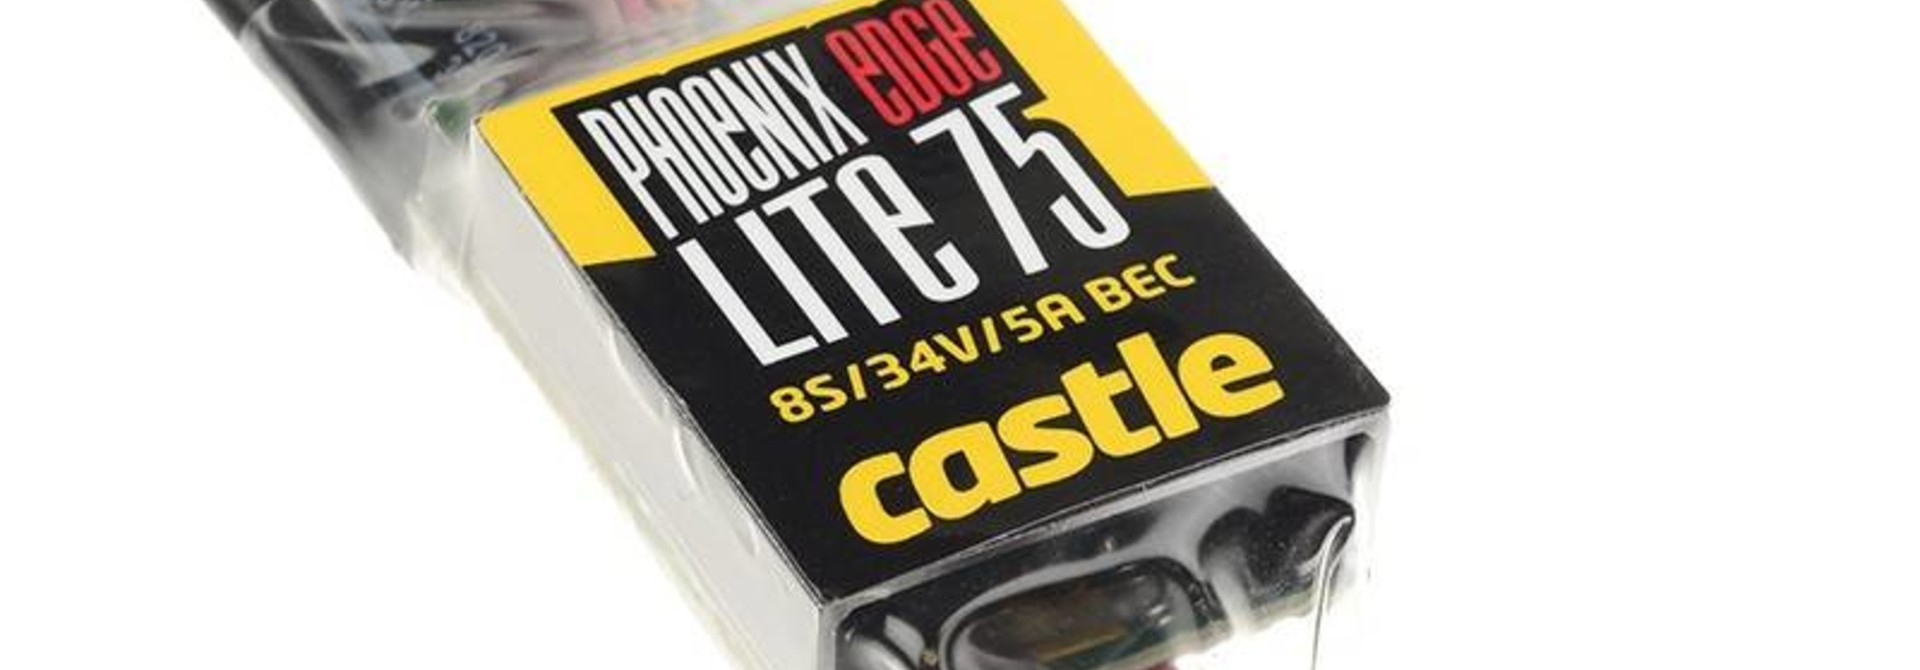 Castle - Phoenix Edge Lite 75 - Hoog-vermogen Air-Heli Brushless regelaar - Lightgewicht versie - Datalogging - Telemetrie mogelijkheid - Aux. kabel - 2-8S - 75A - 5A SBec